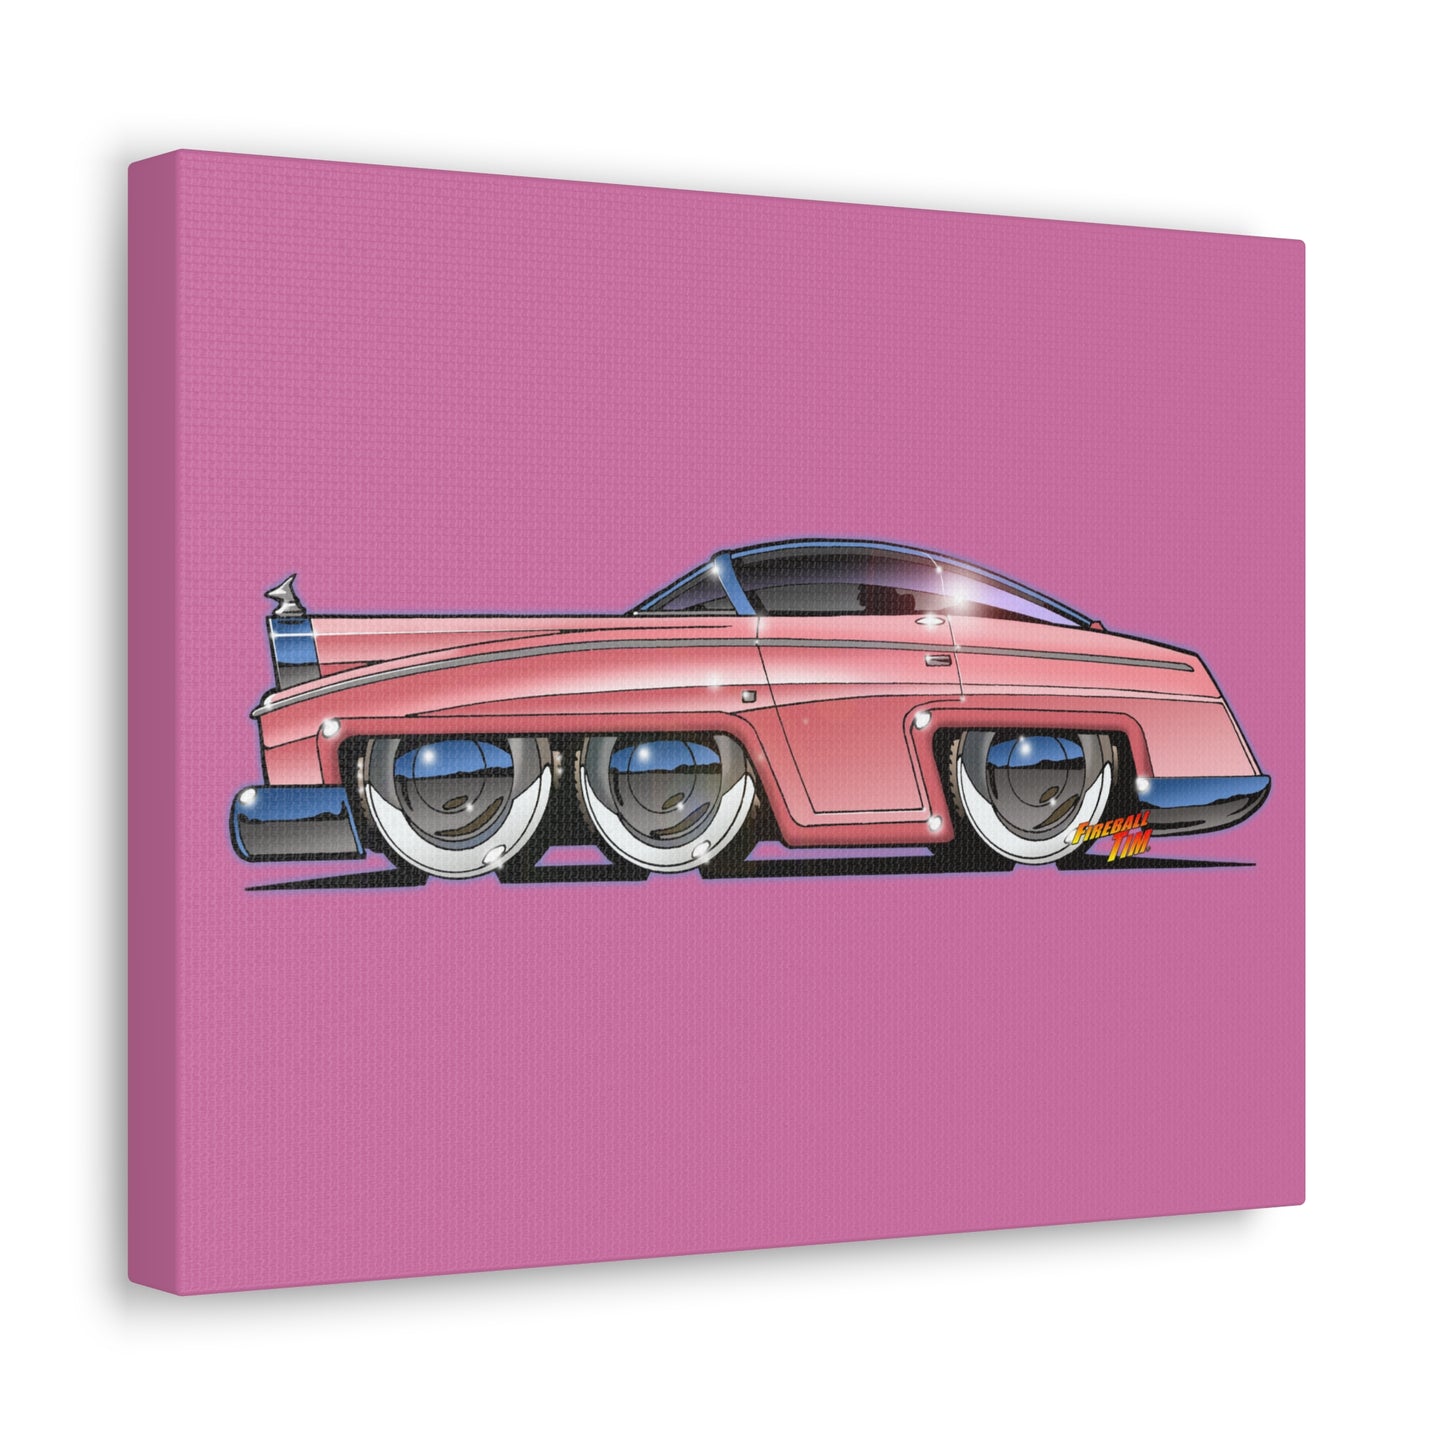 LADY PENELOPE FAB 1 Thunderbirds TV Car Canvas Gallery Art Print 11x14